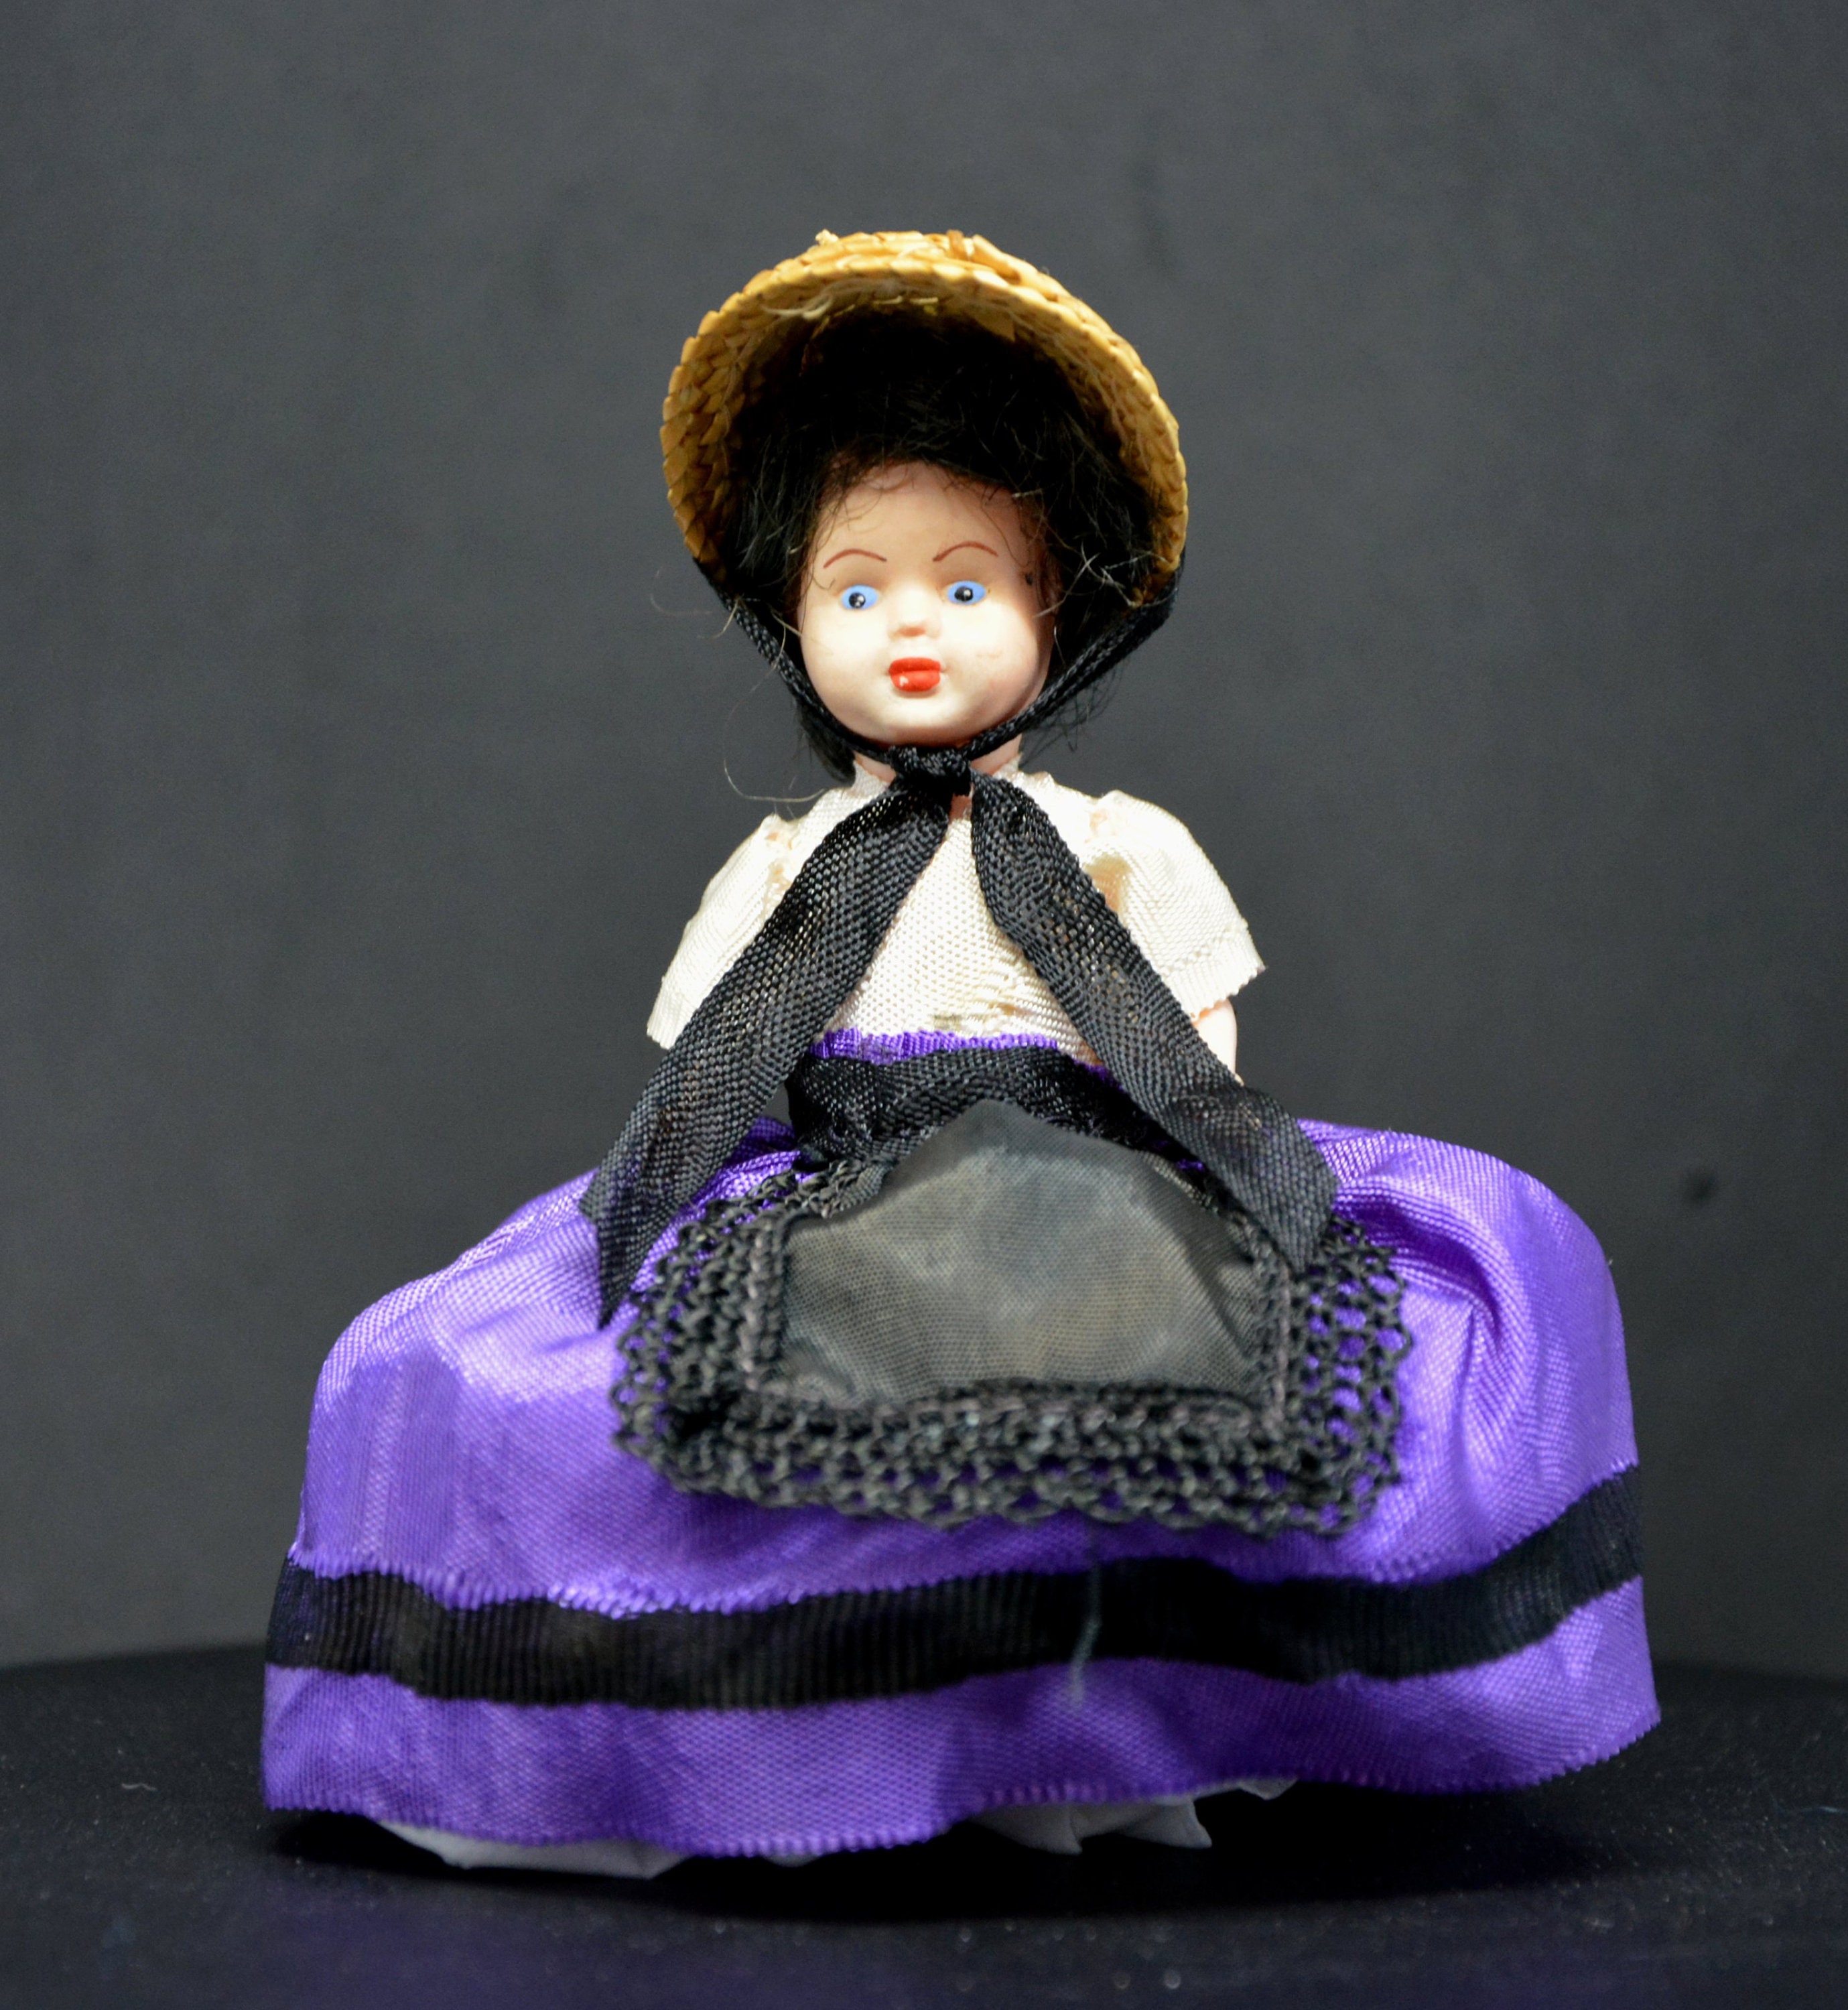 Chiffon doll Mademoiselle Eloïse - Parisians - Moulin Roty